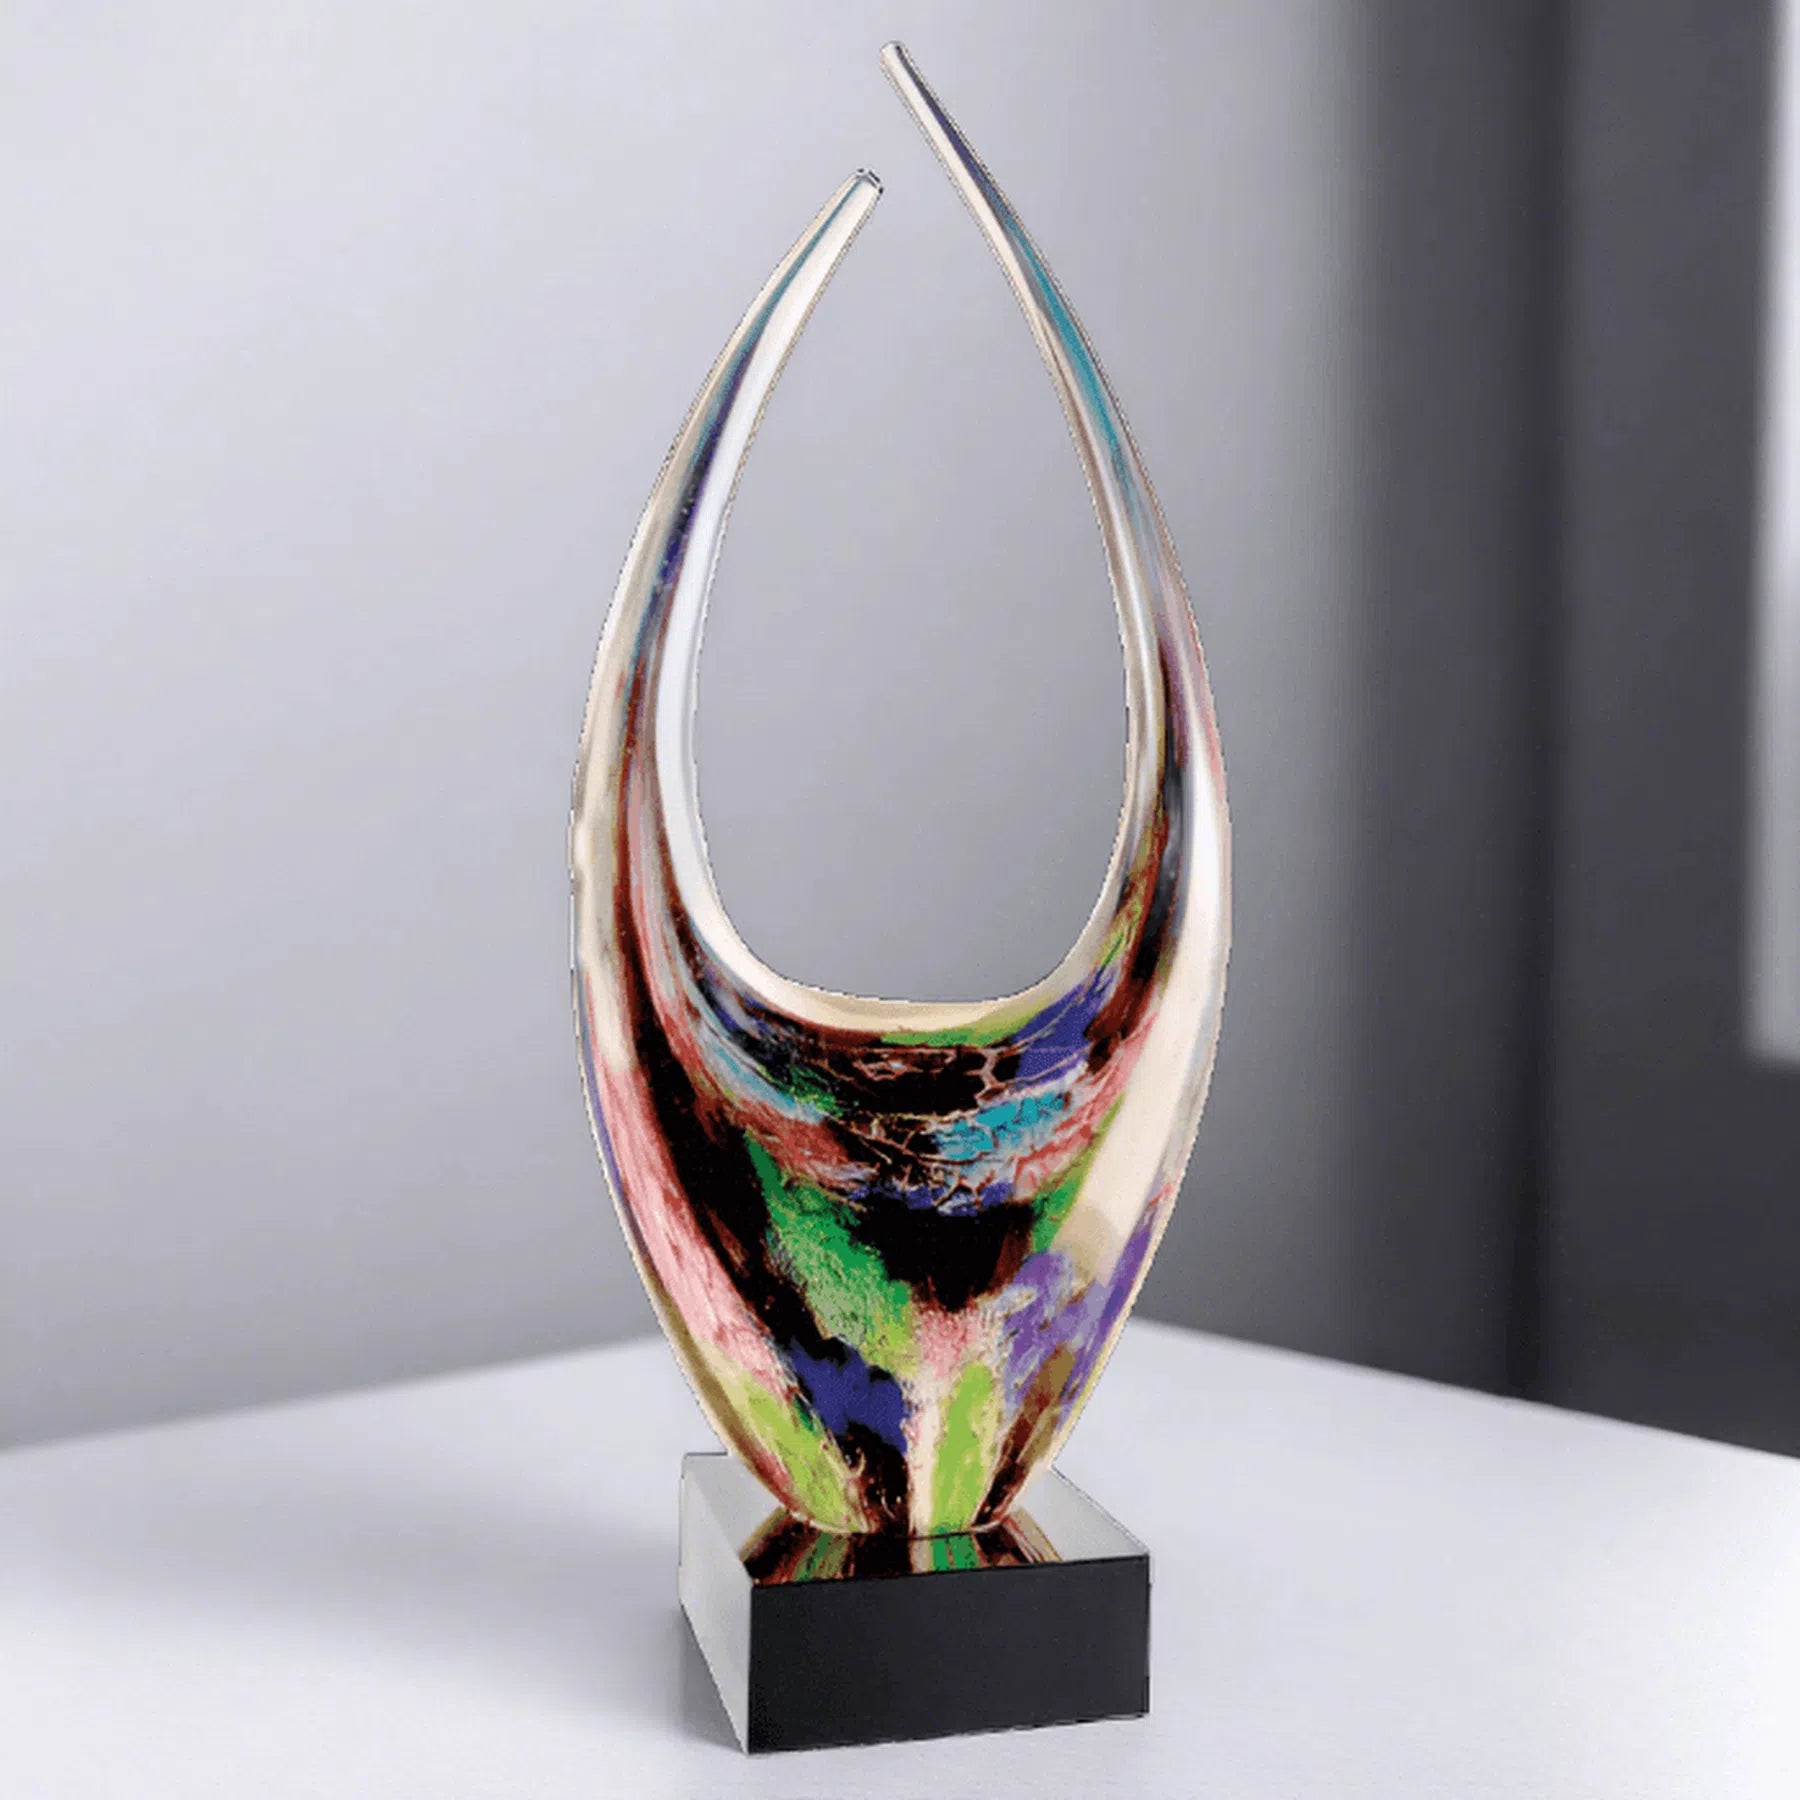 16 3/4" Dual Rising Art Glass Award Sculpture